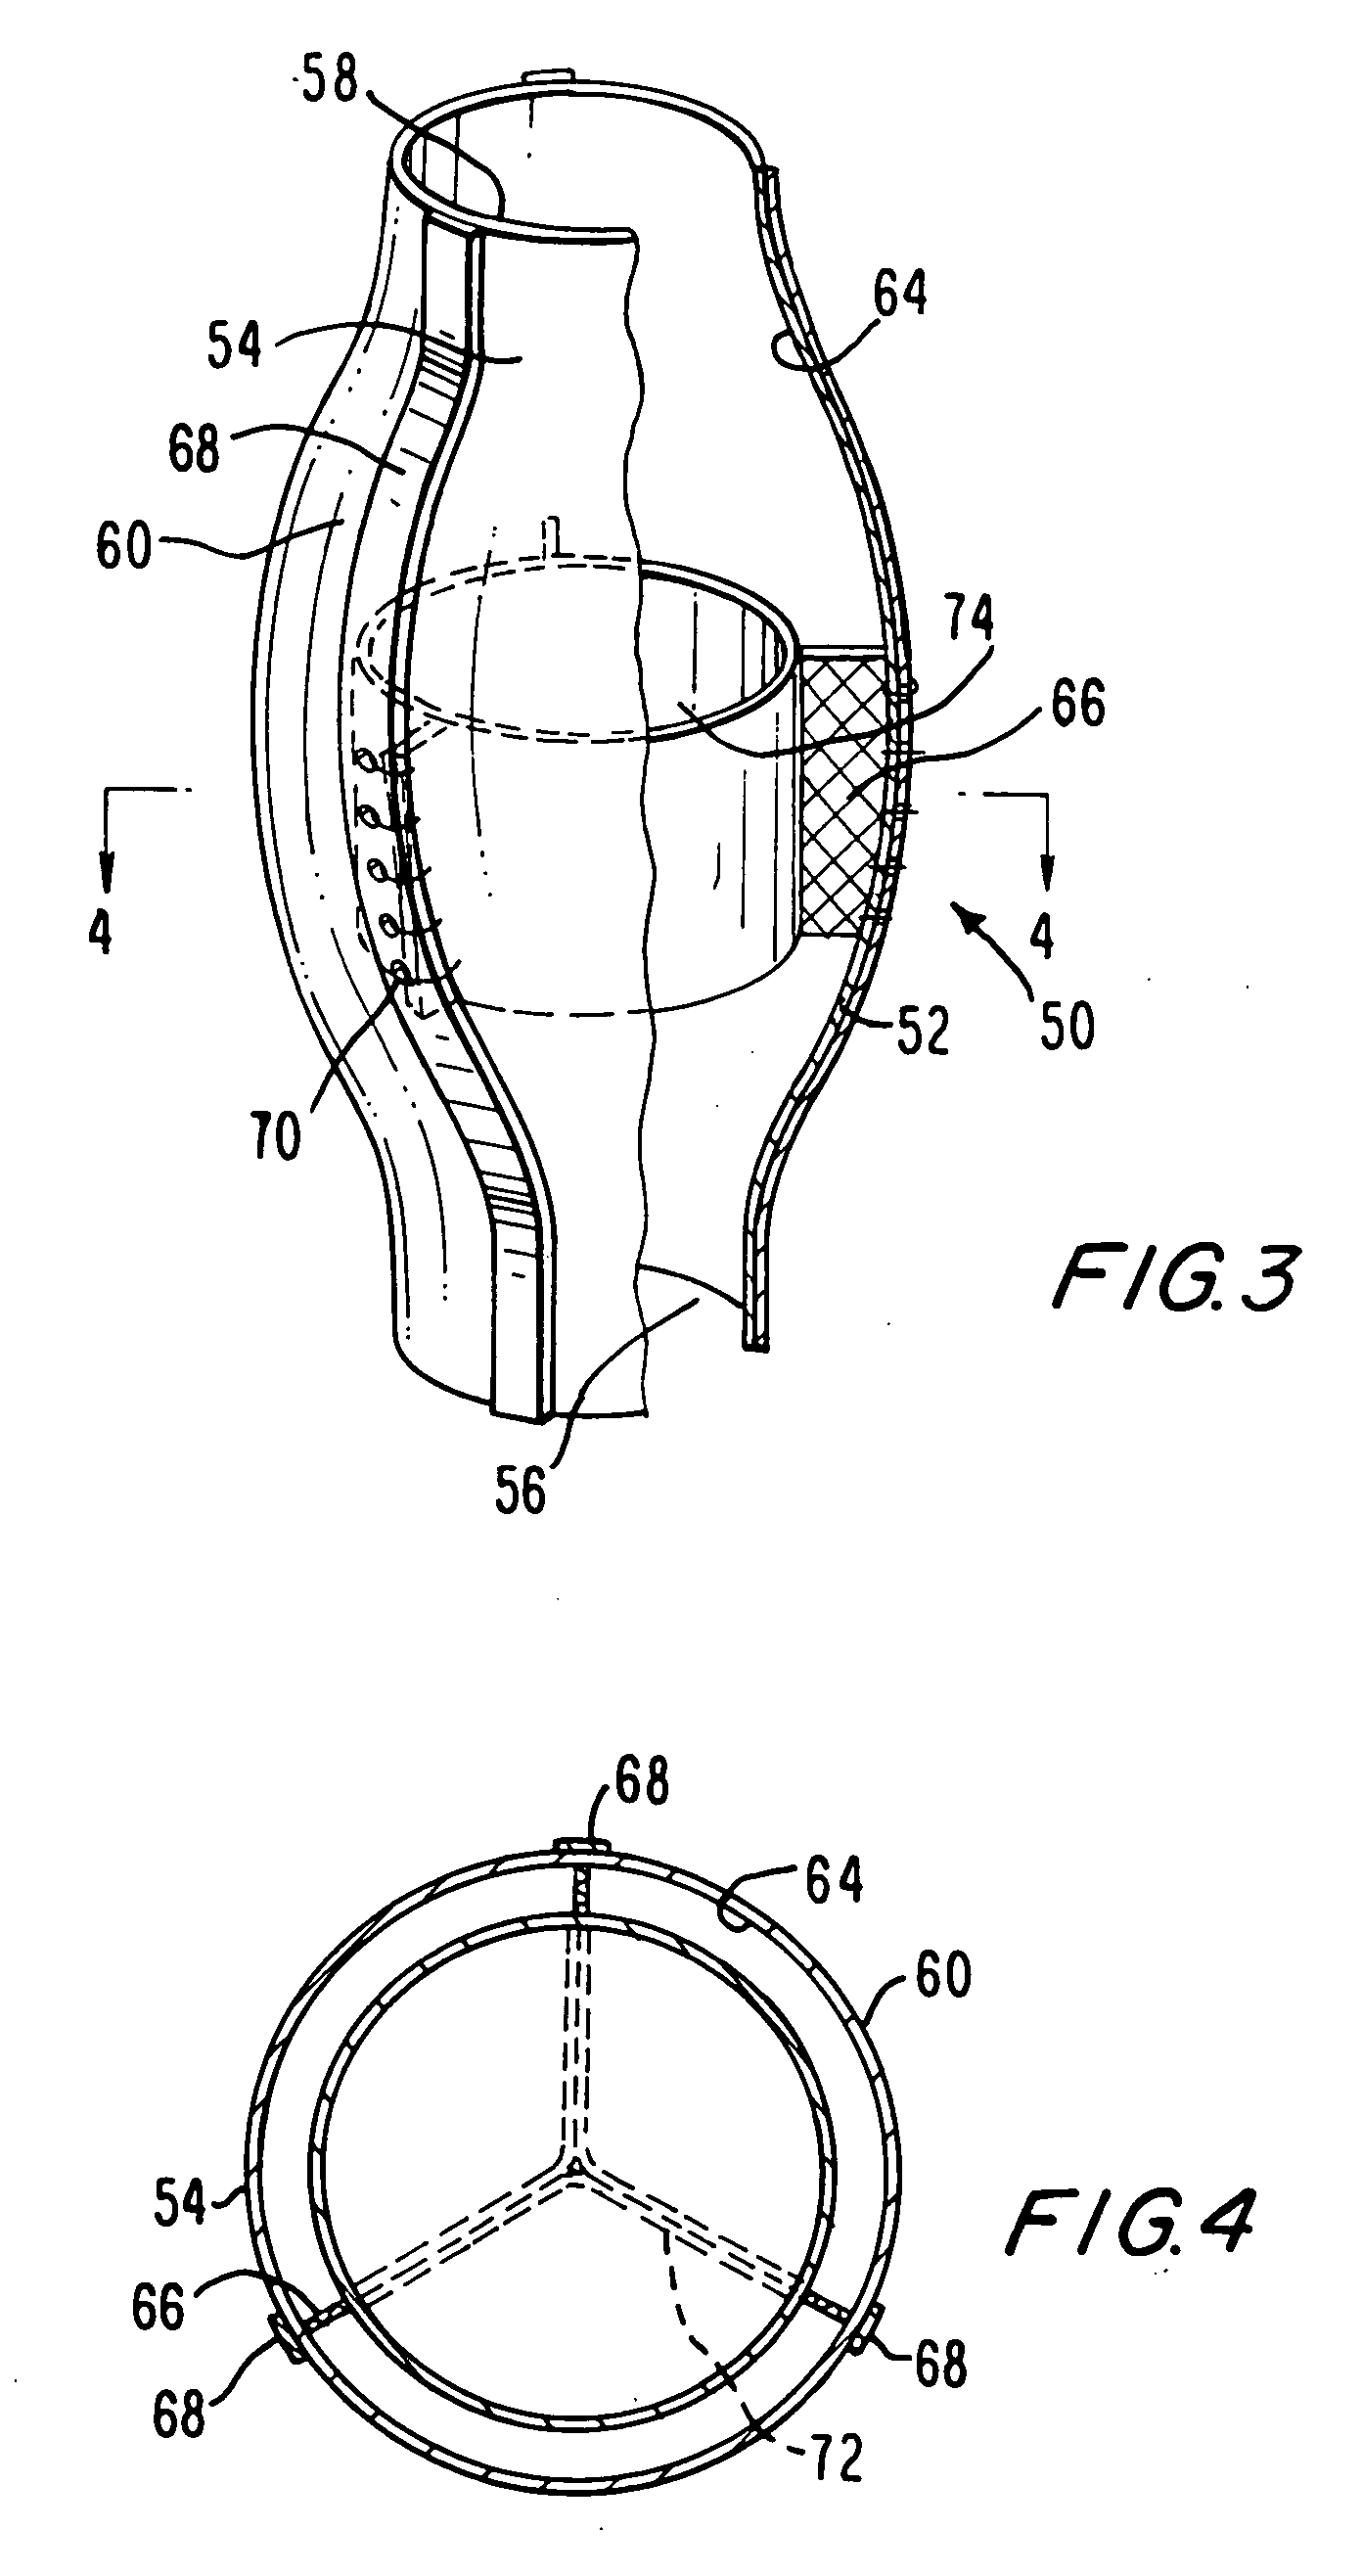 Implantable prosthetic valve with non-laminar flow